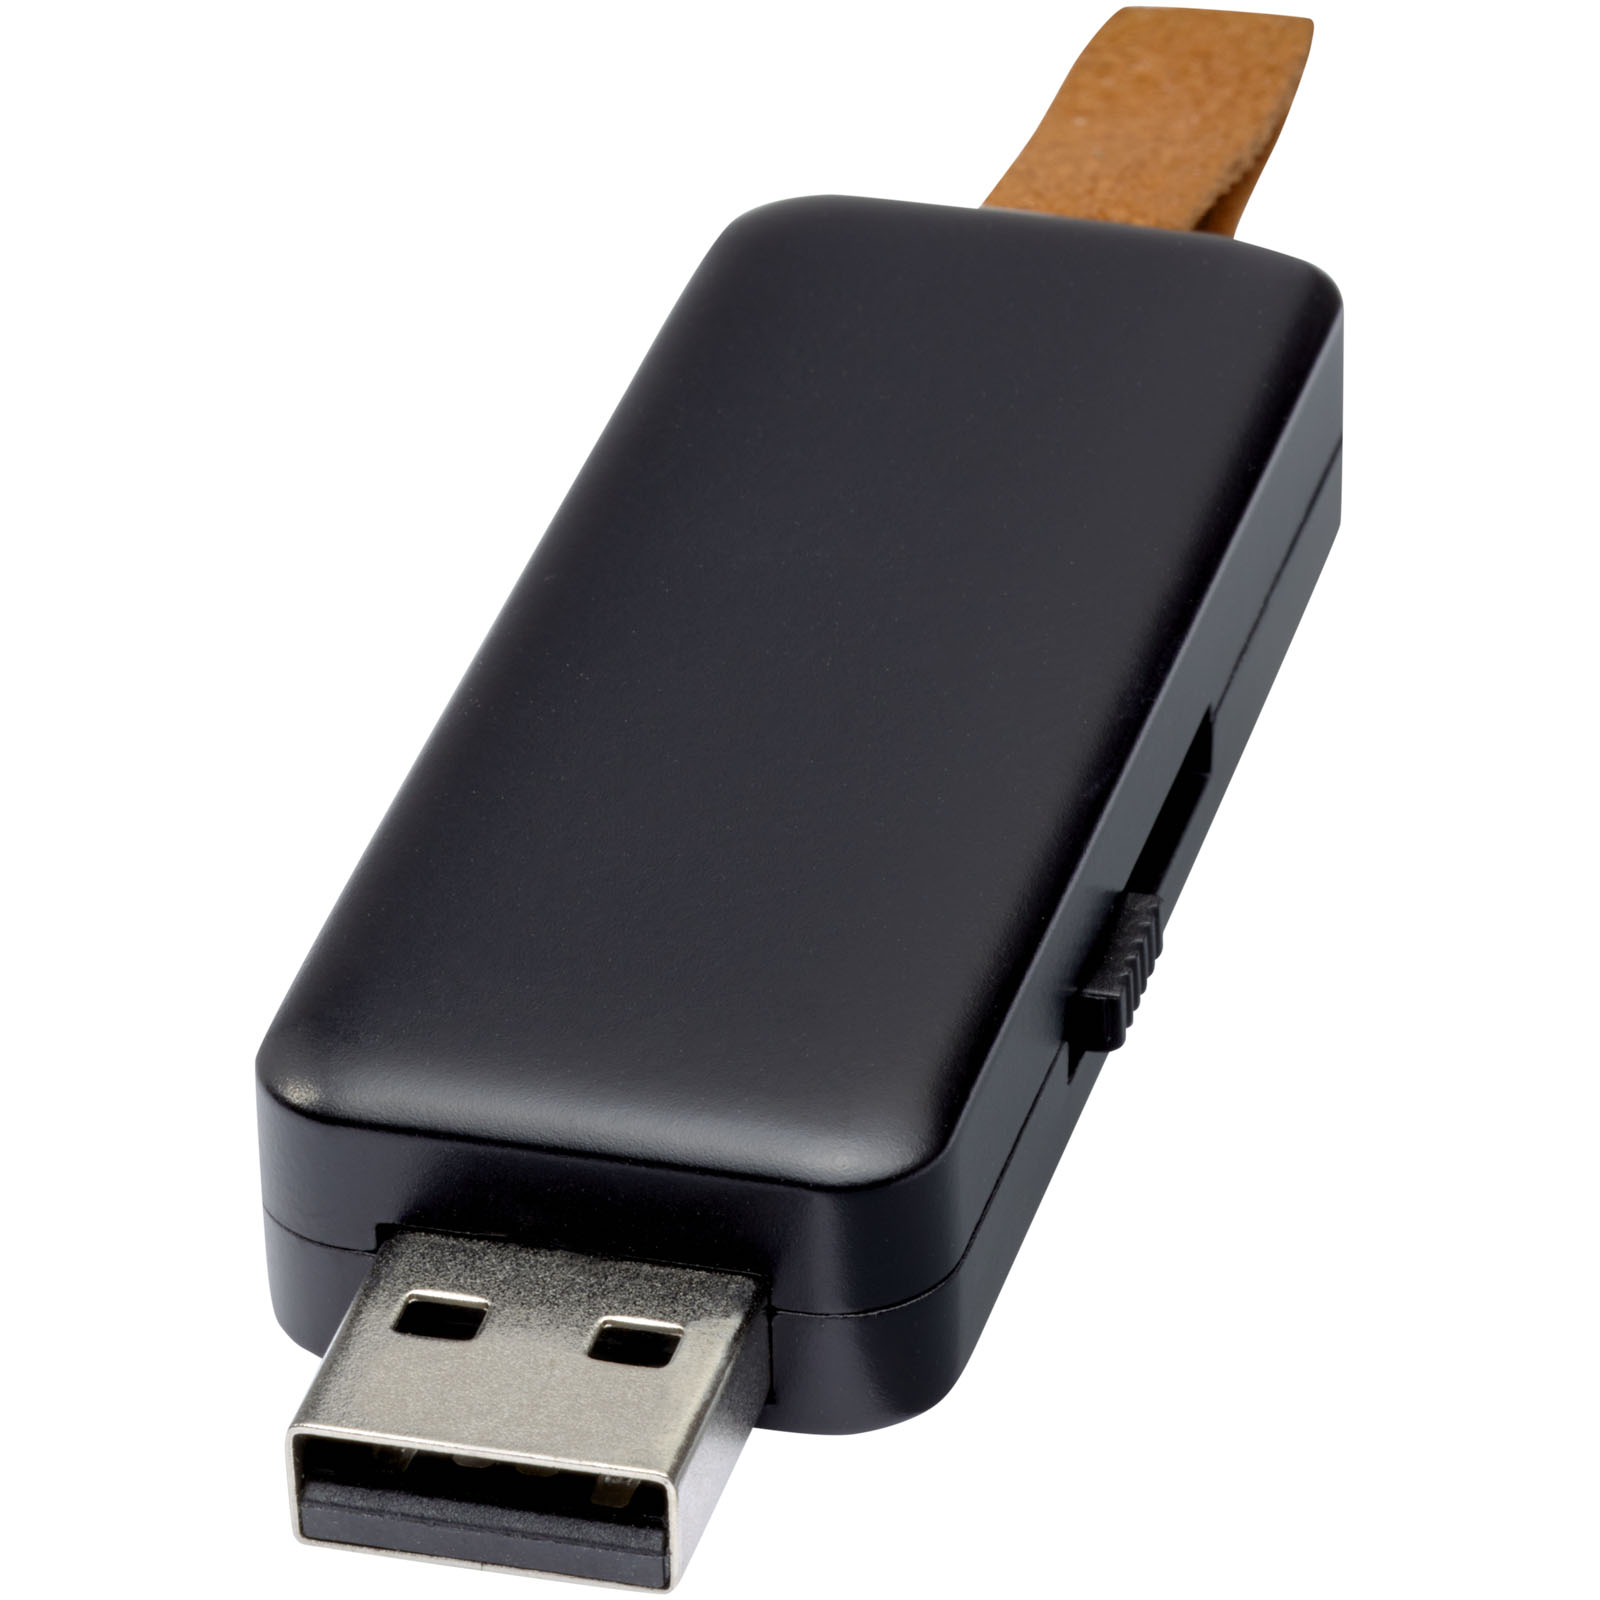 Advertising USB Flash Drives - Gleam 4GB light-up USB flash drive